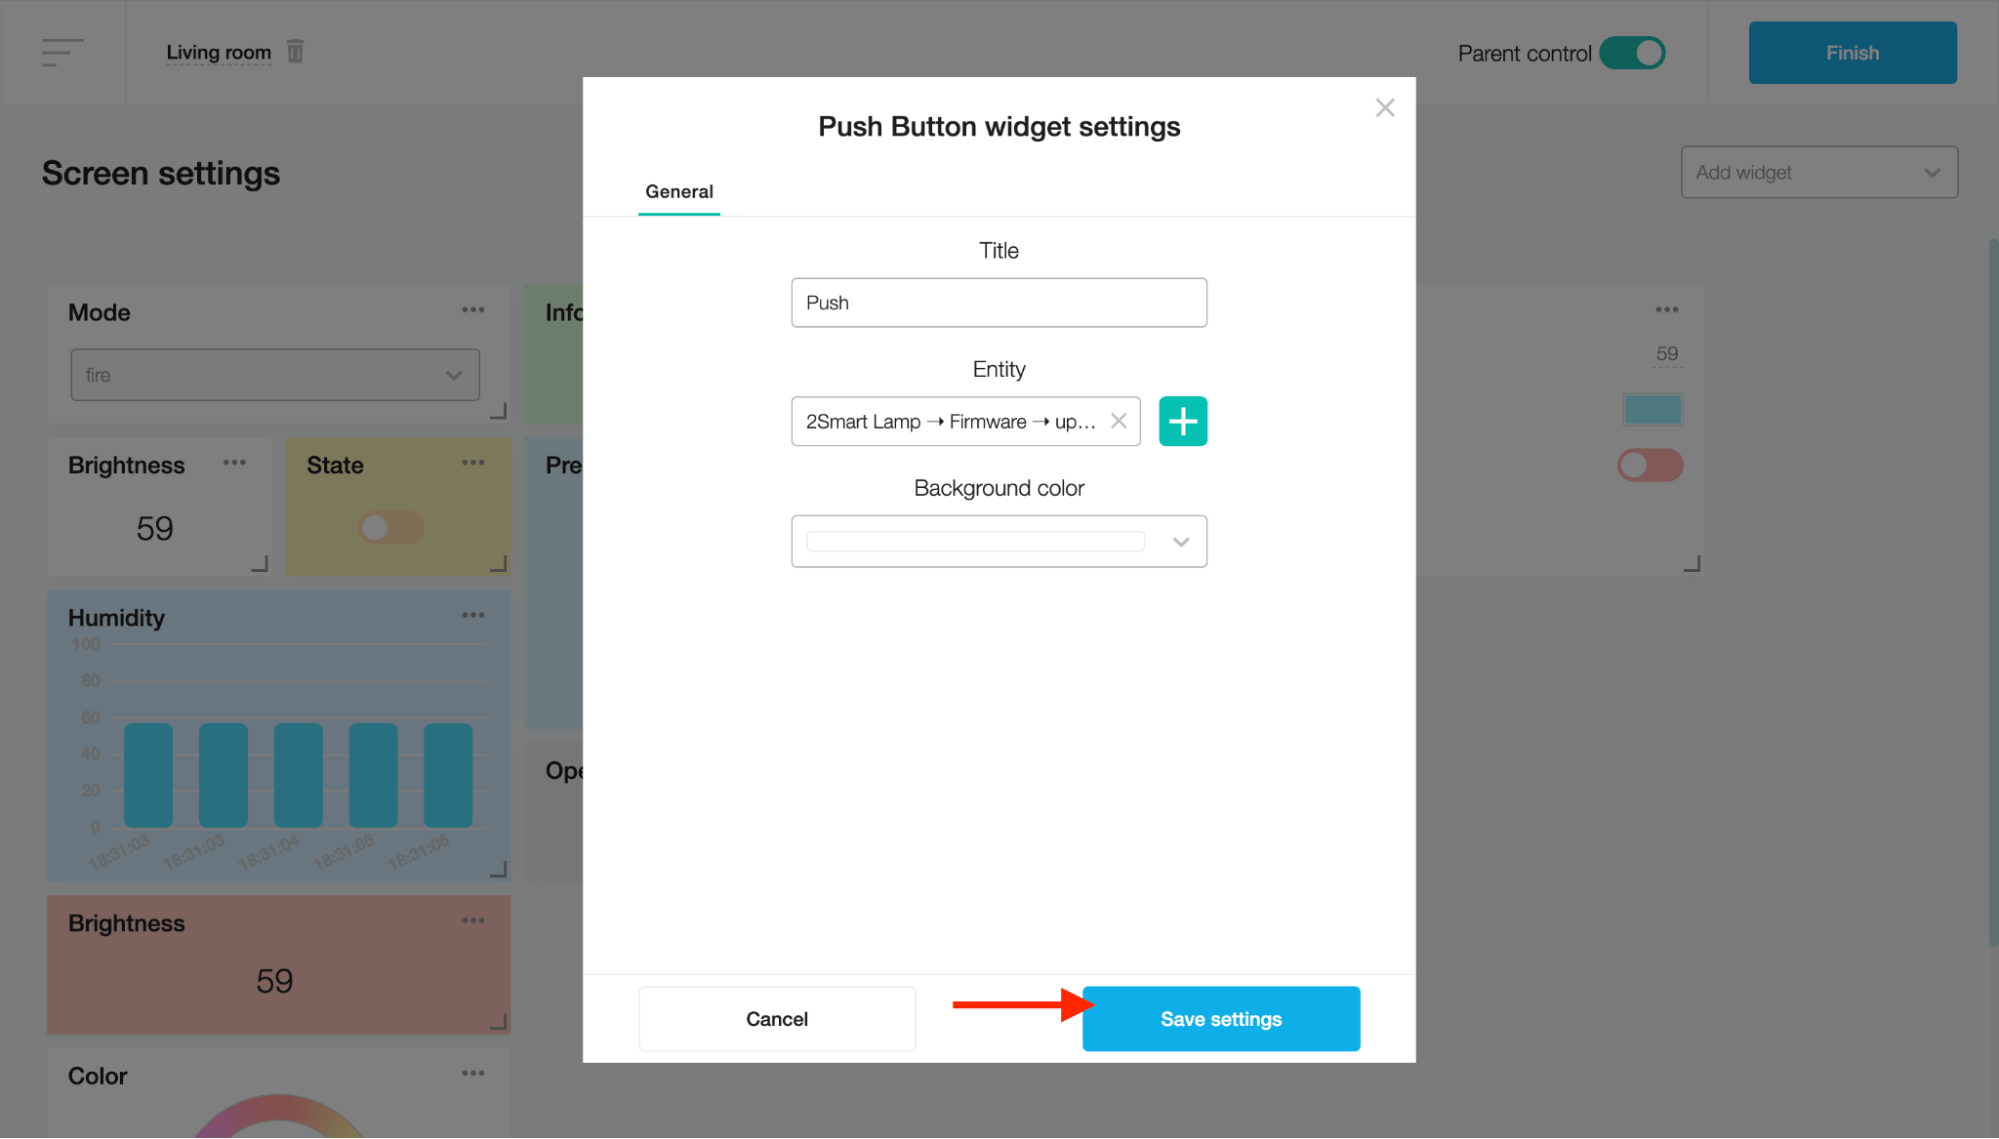 Push button widget settings